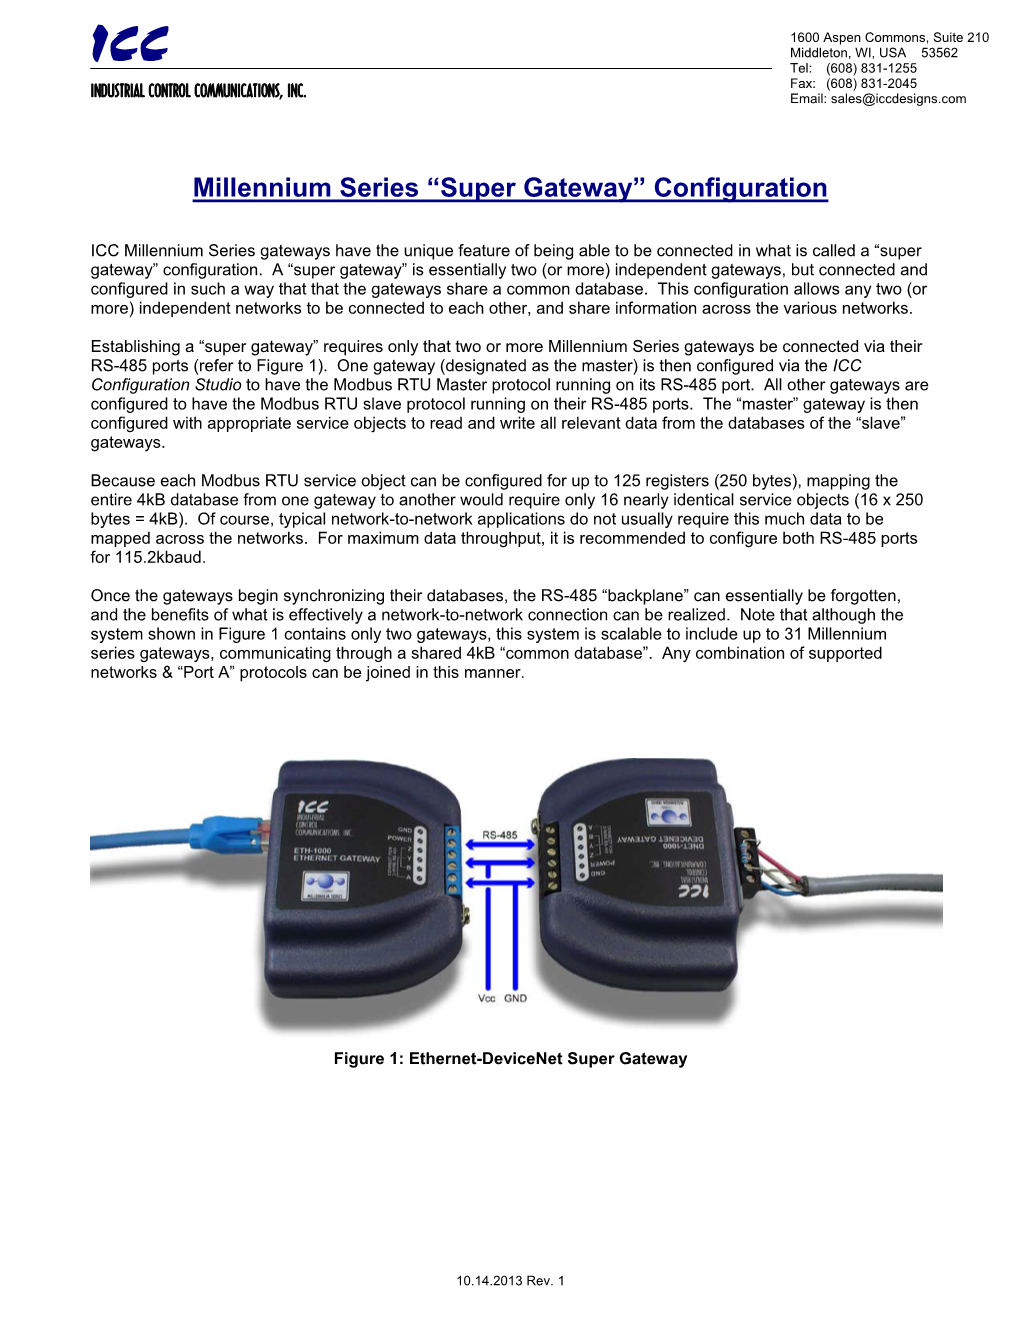 Millennium Series “Super Gateway” Configuration